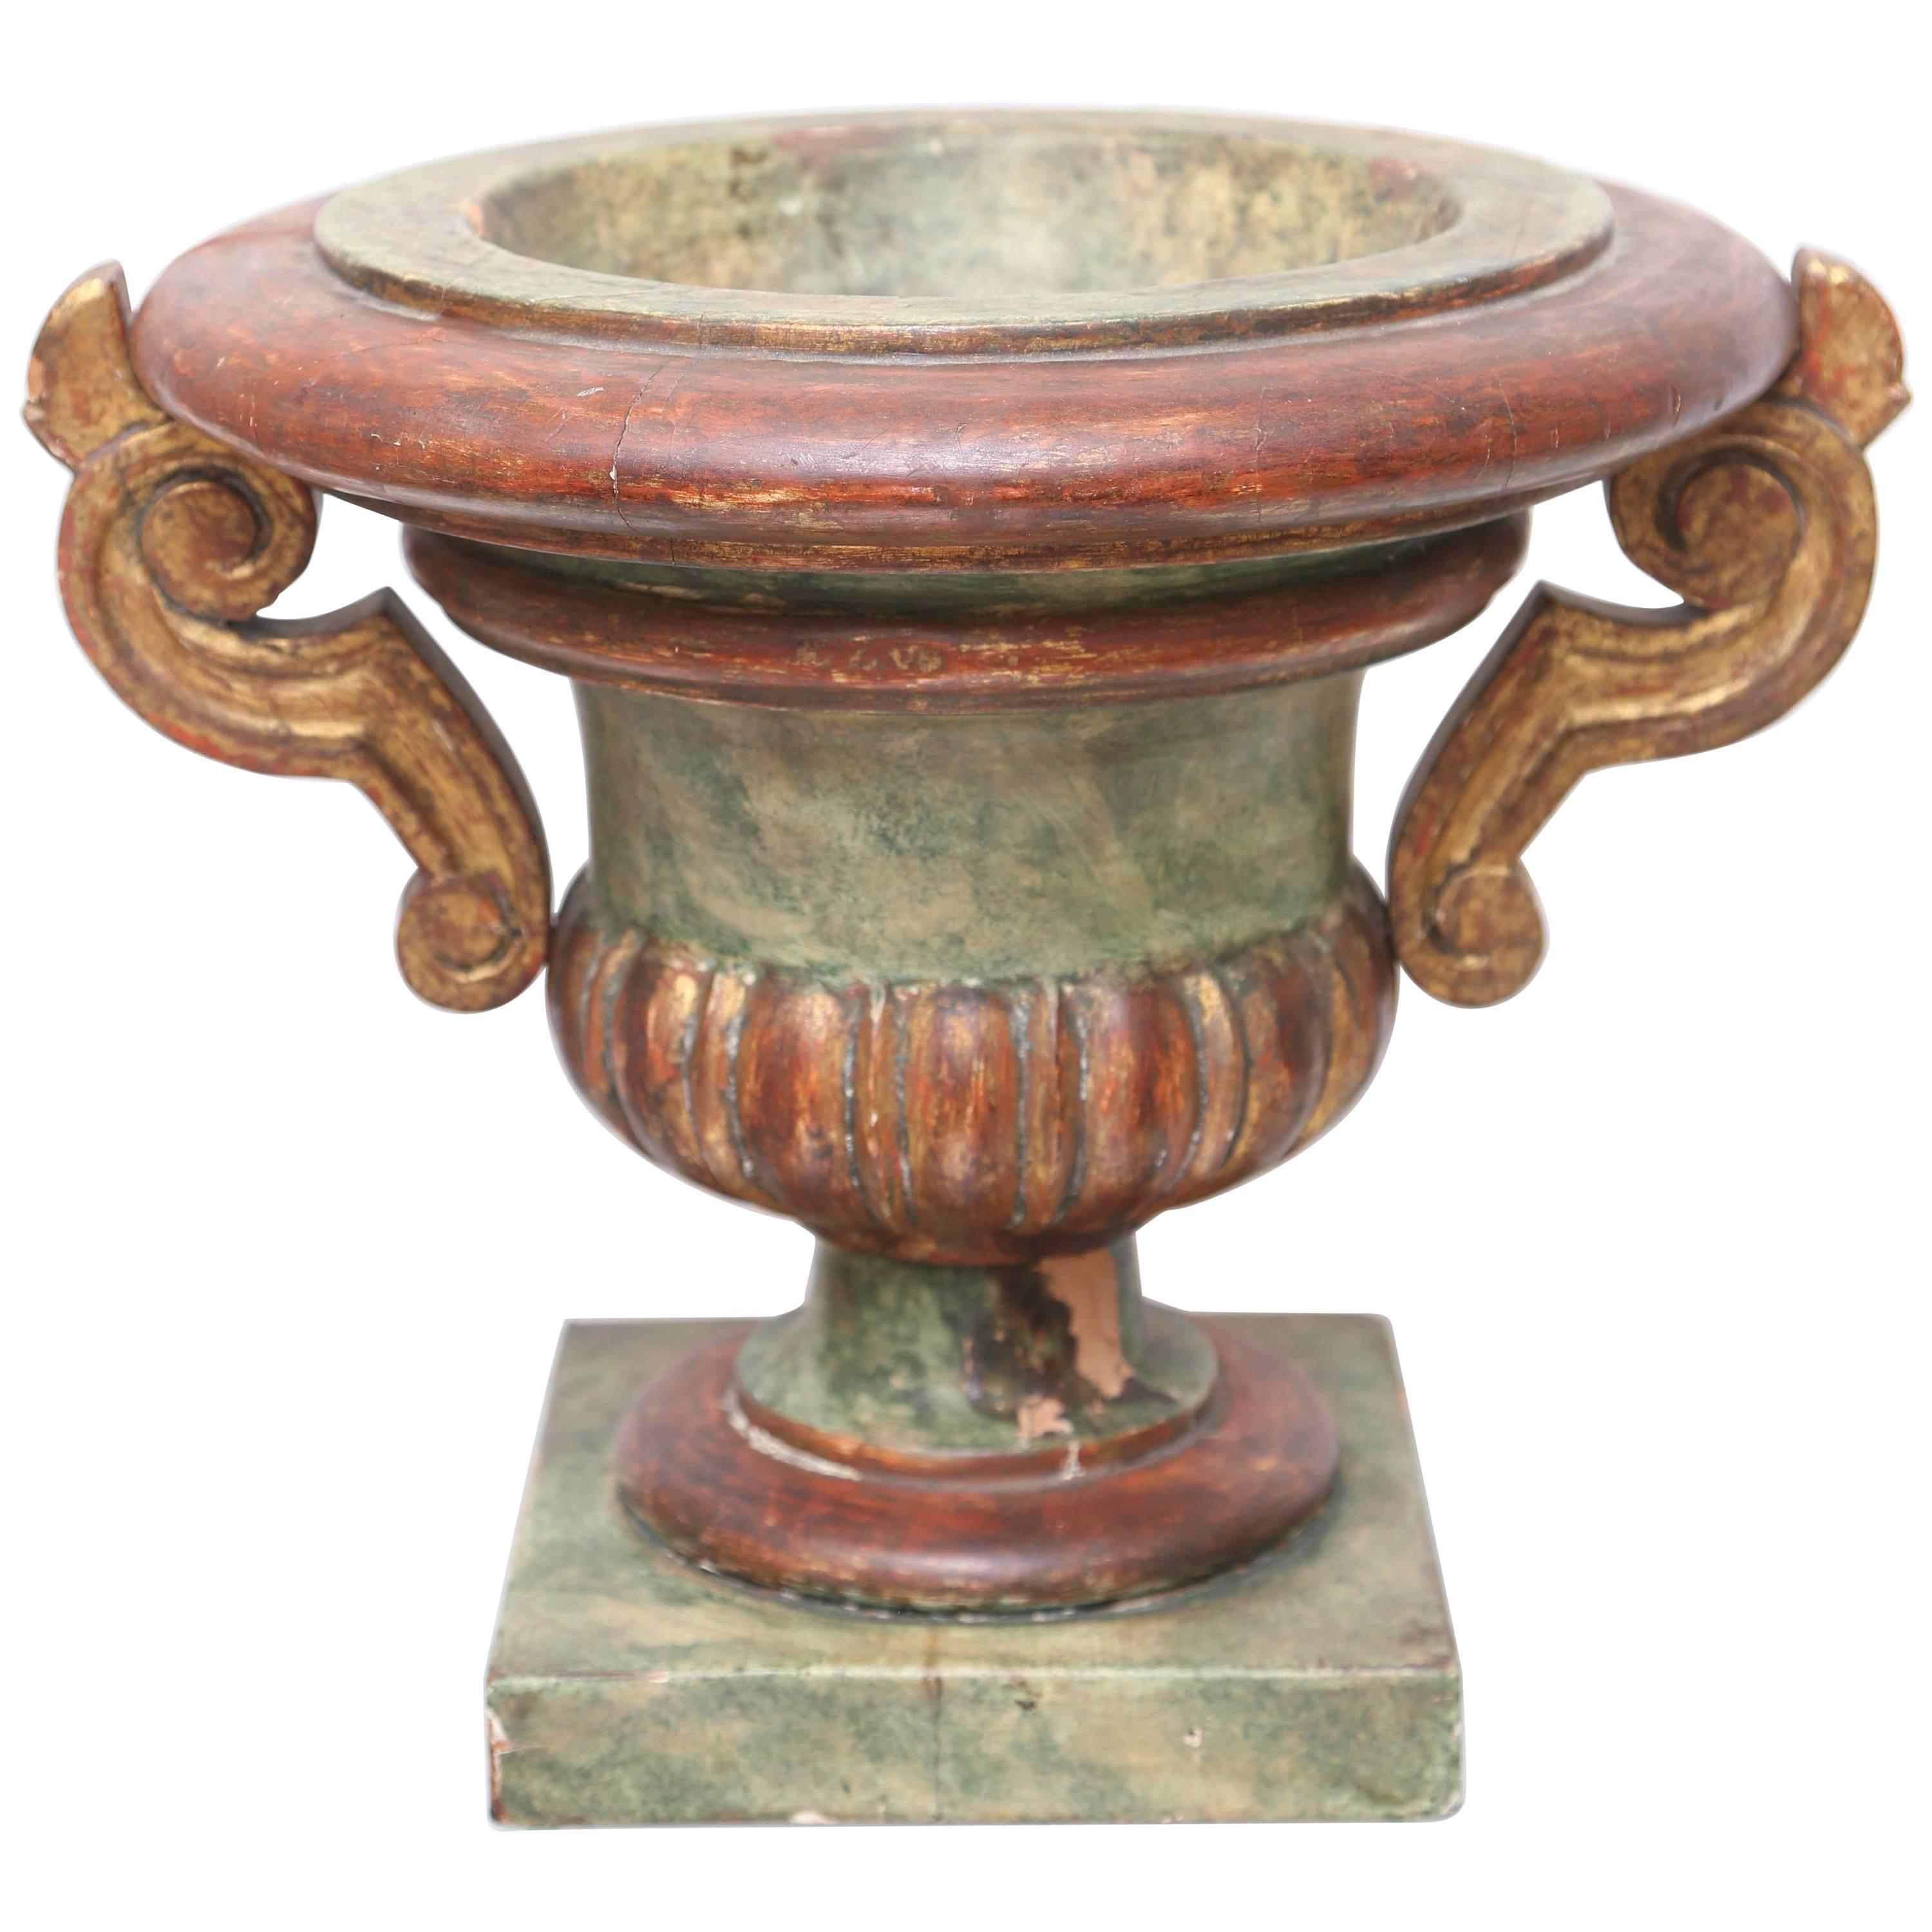 Vintage Painted Carved Wood Urn by Chapman